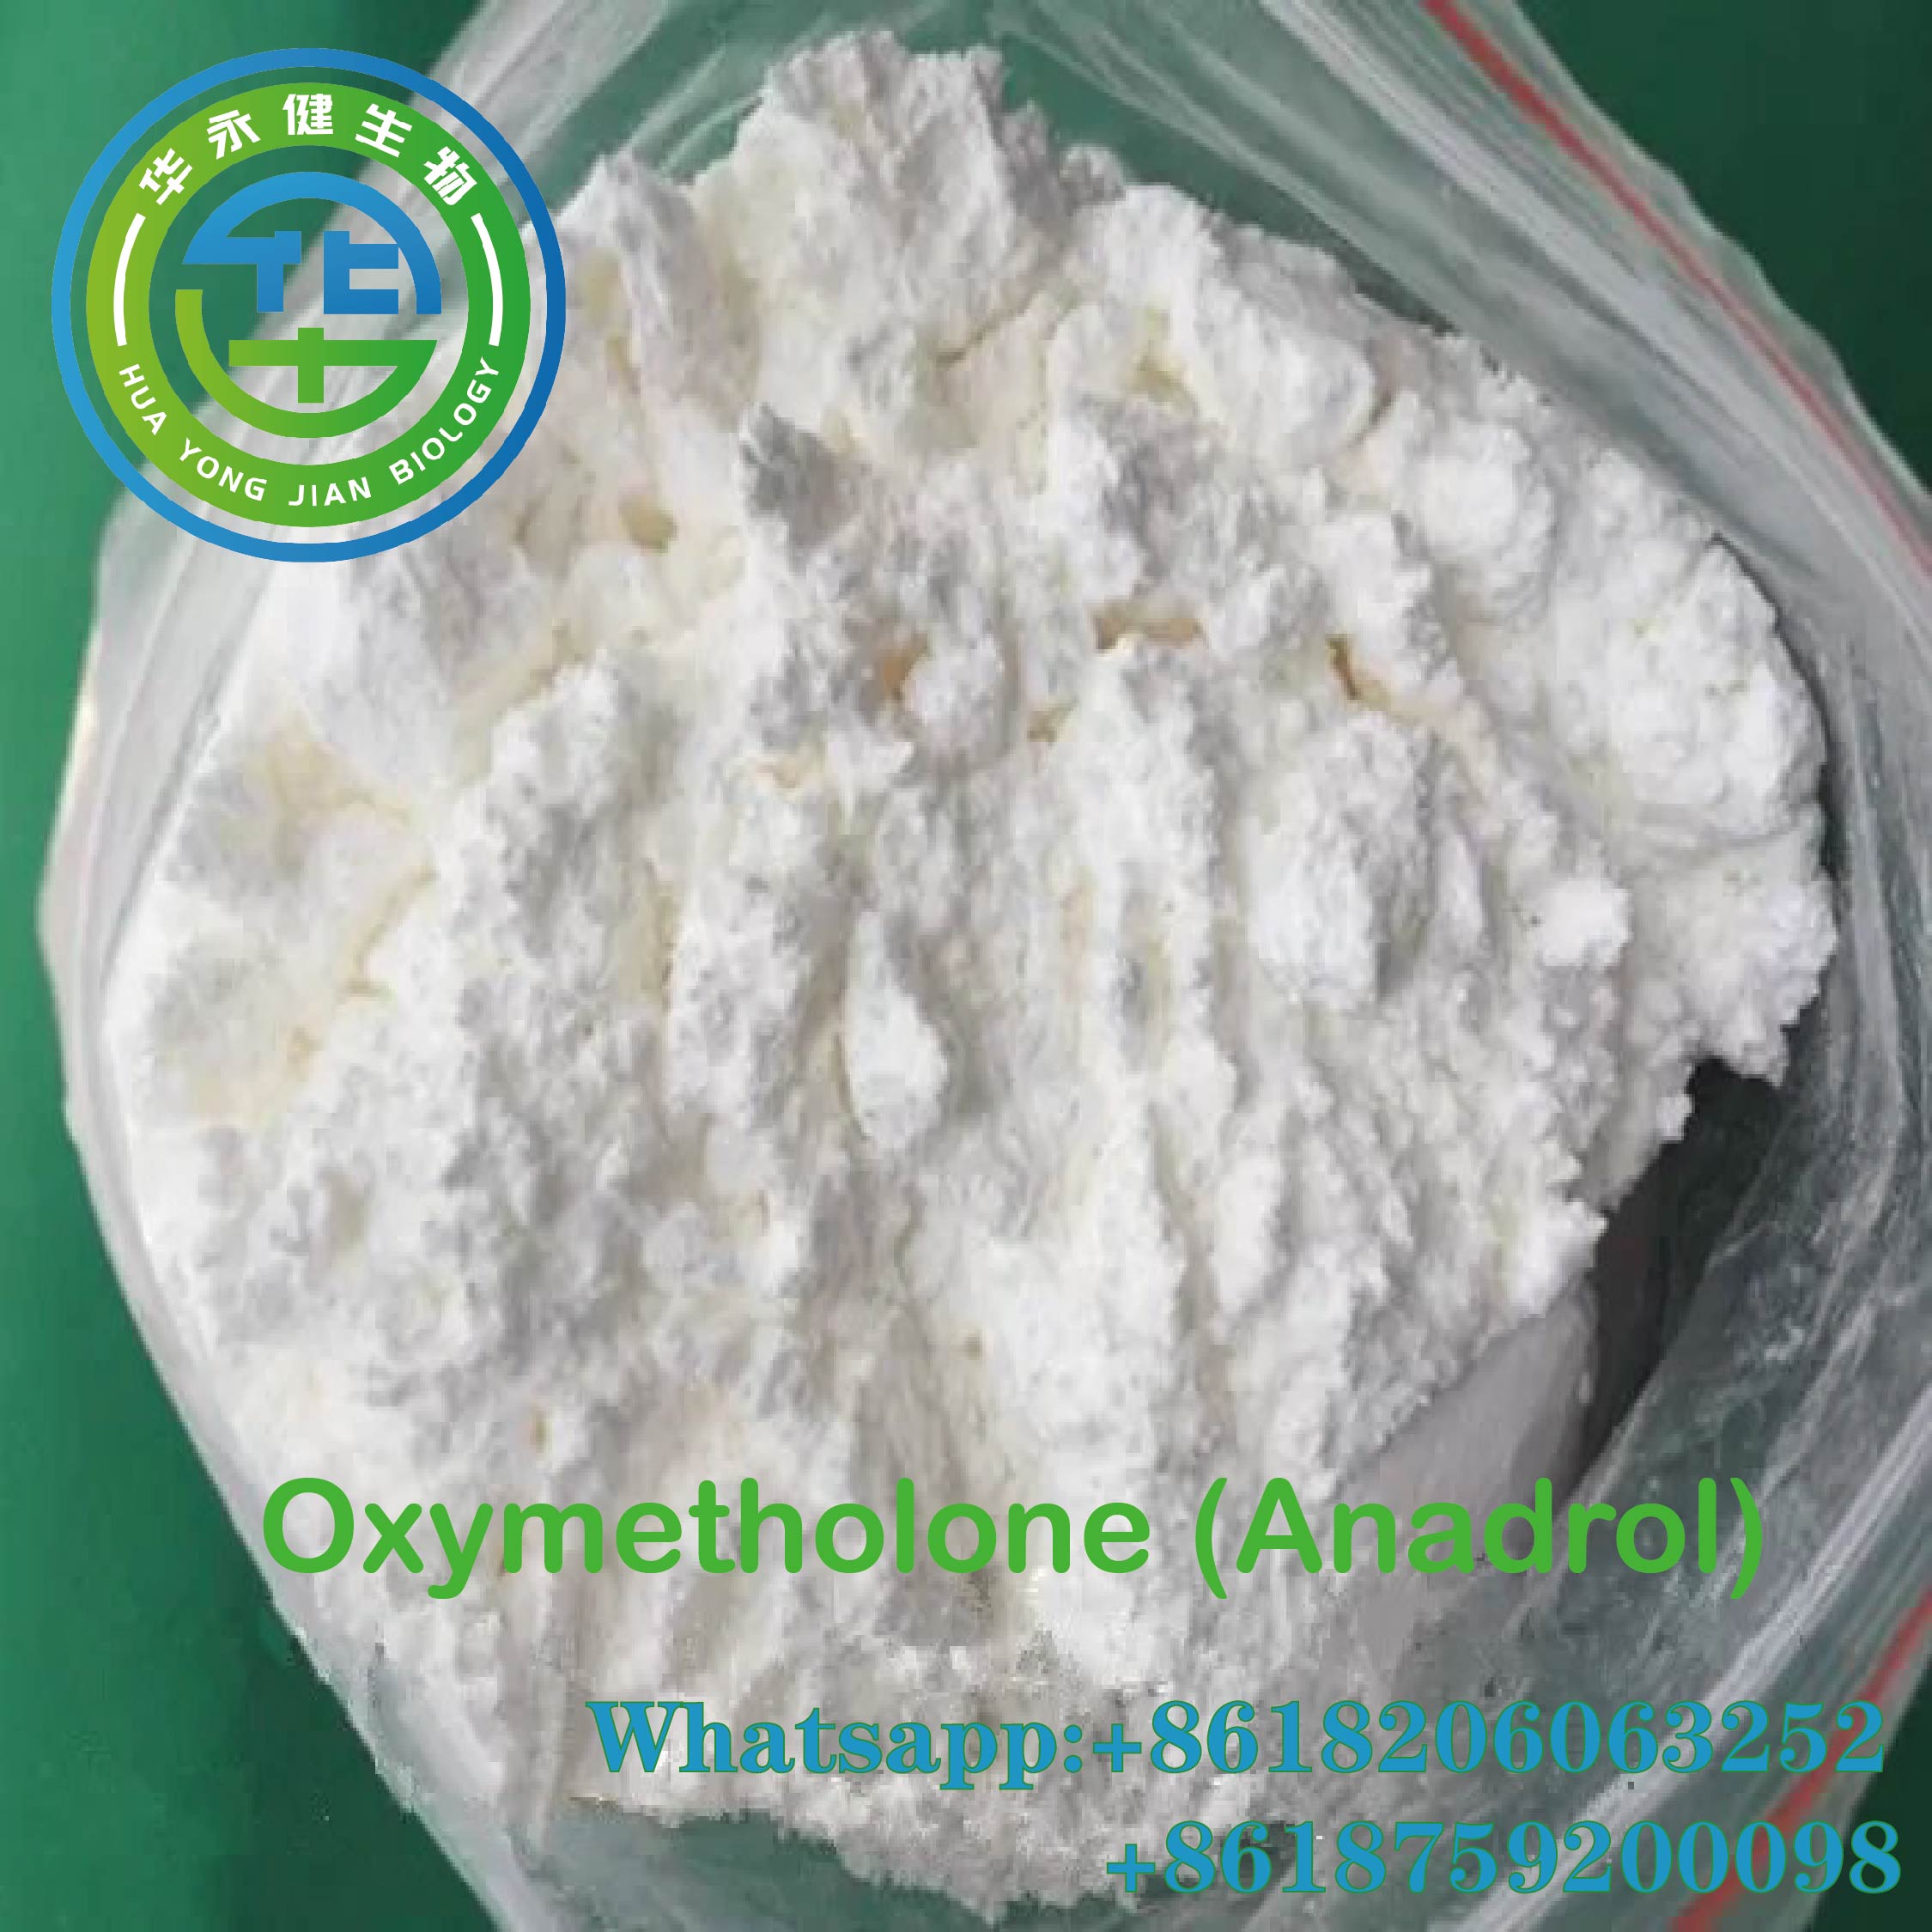 Oxymetholone Test Steroids OXY Powder USA UK Canada Malaysia Domestic Shipping CasNO.434-07-1